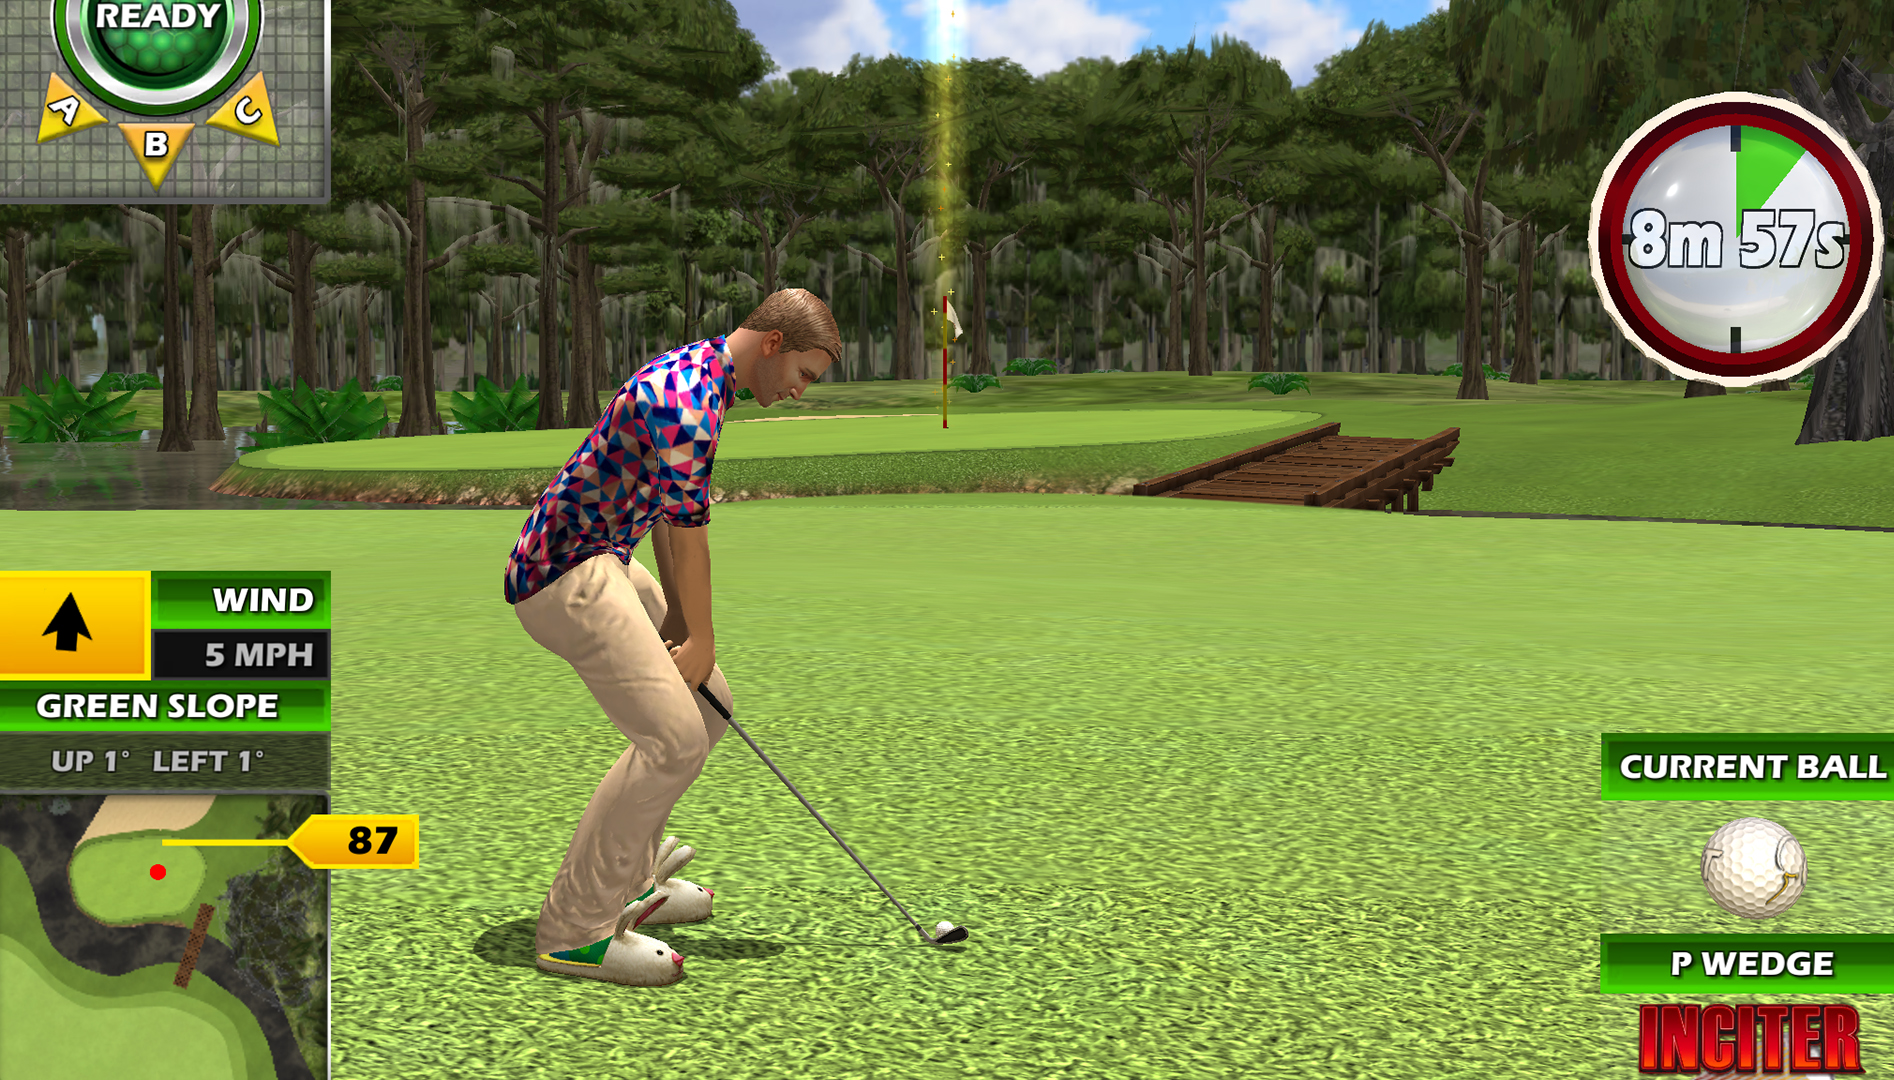 Golden Tee Golf: Online Games - Apps on Google Play